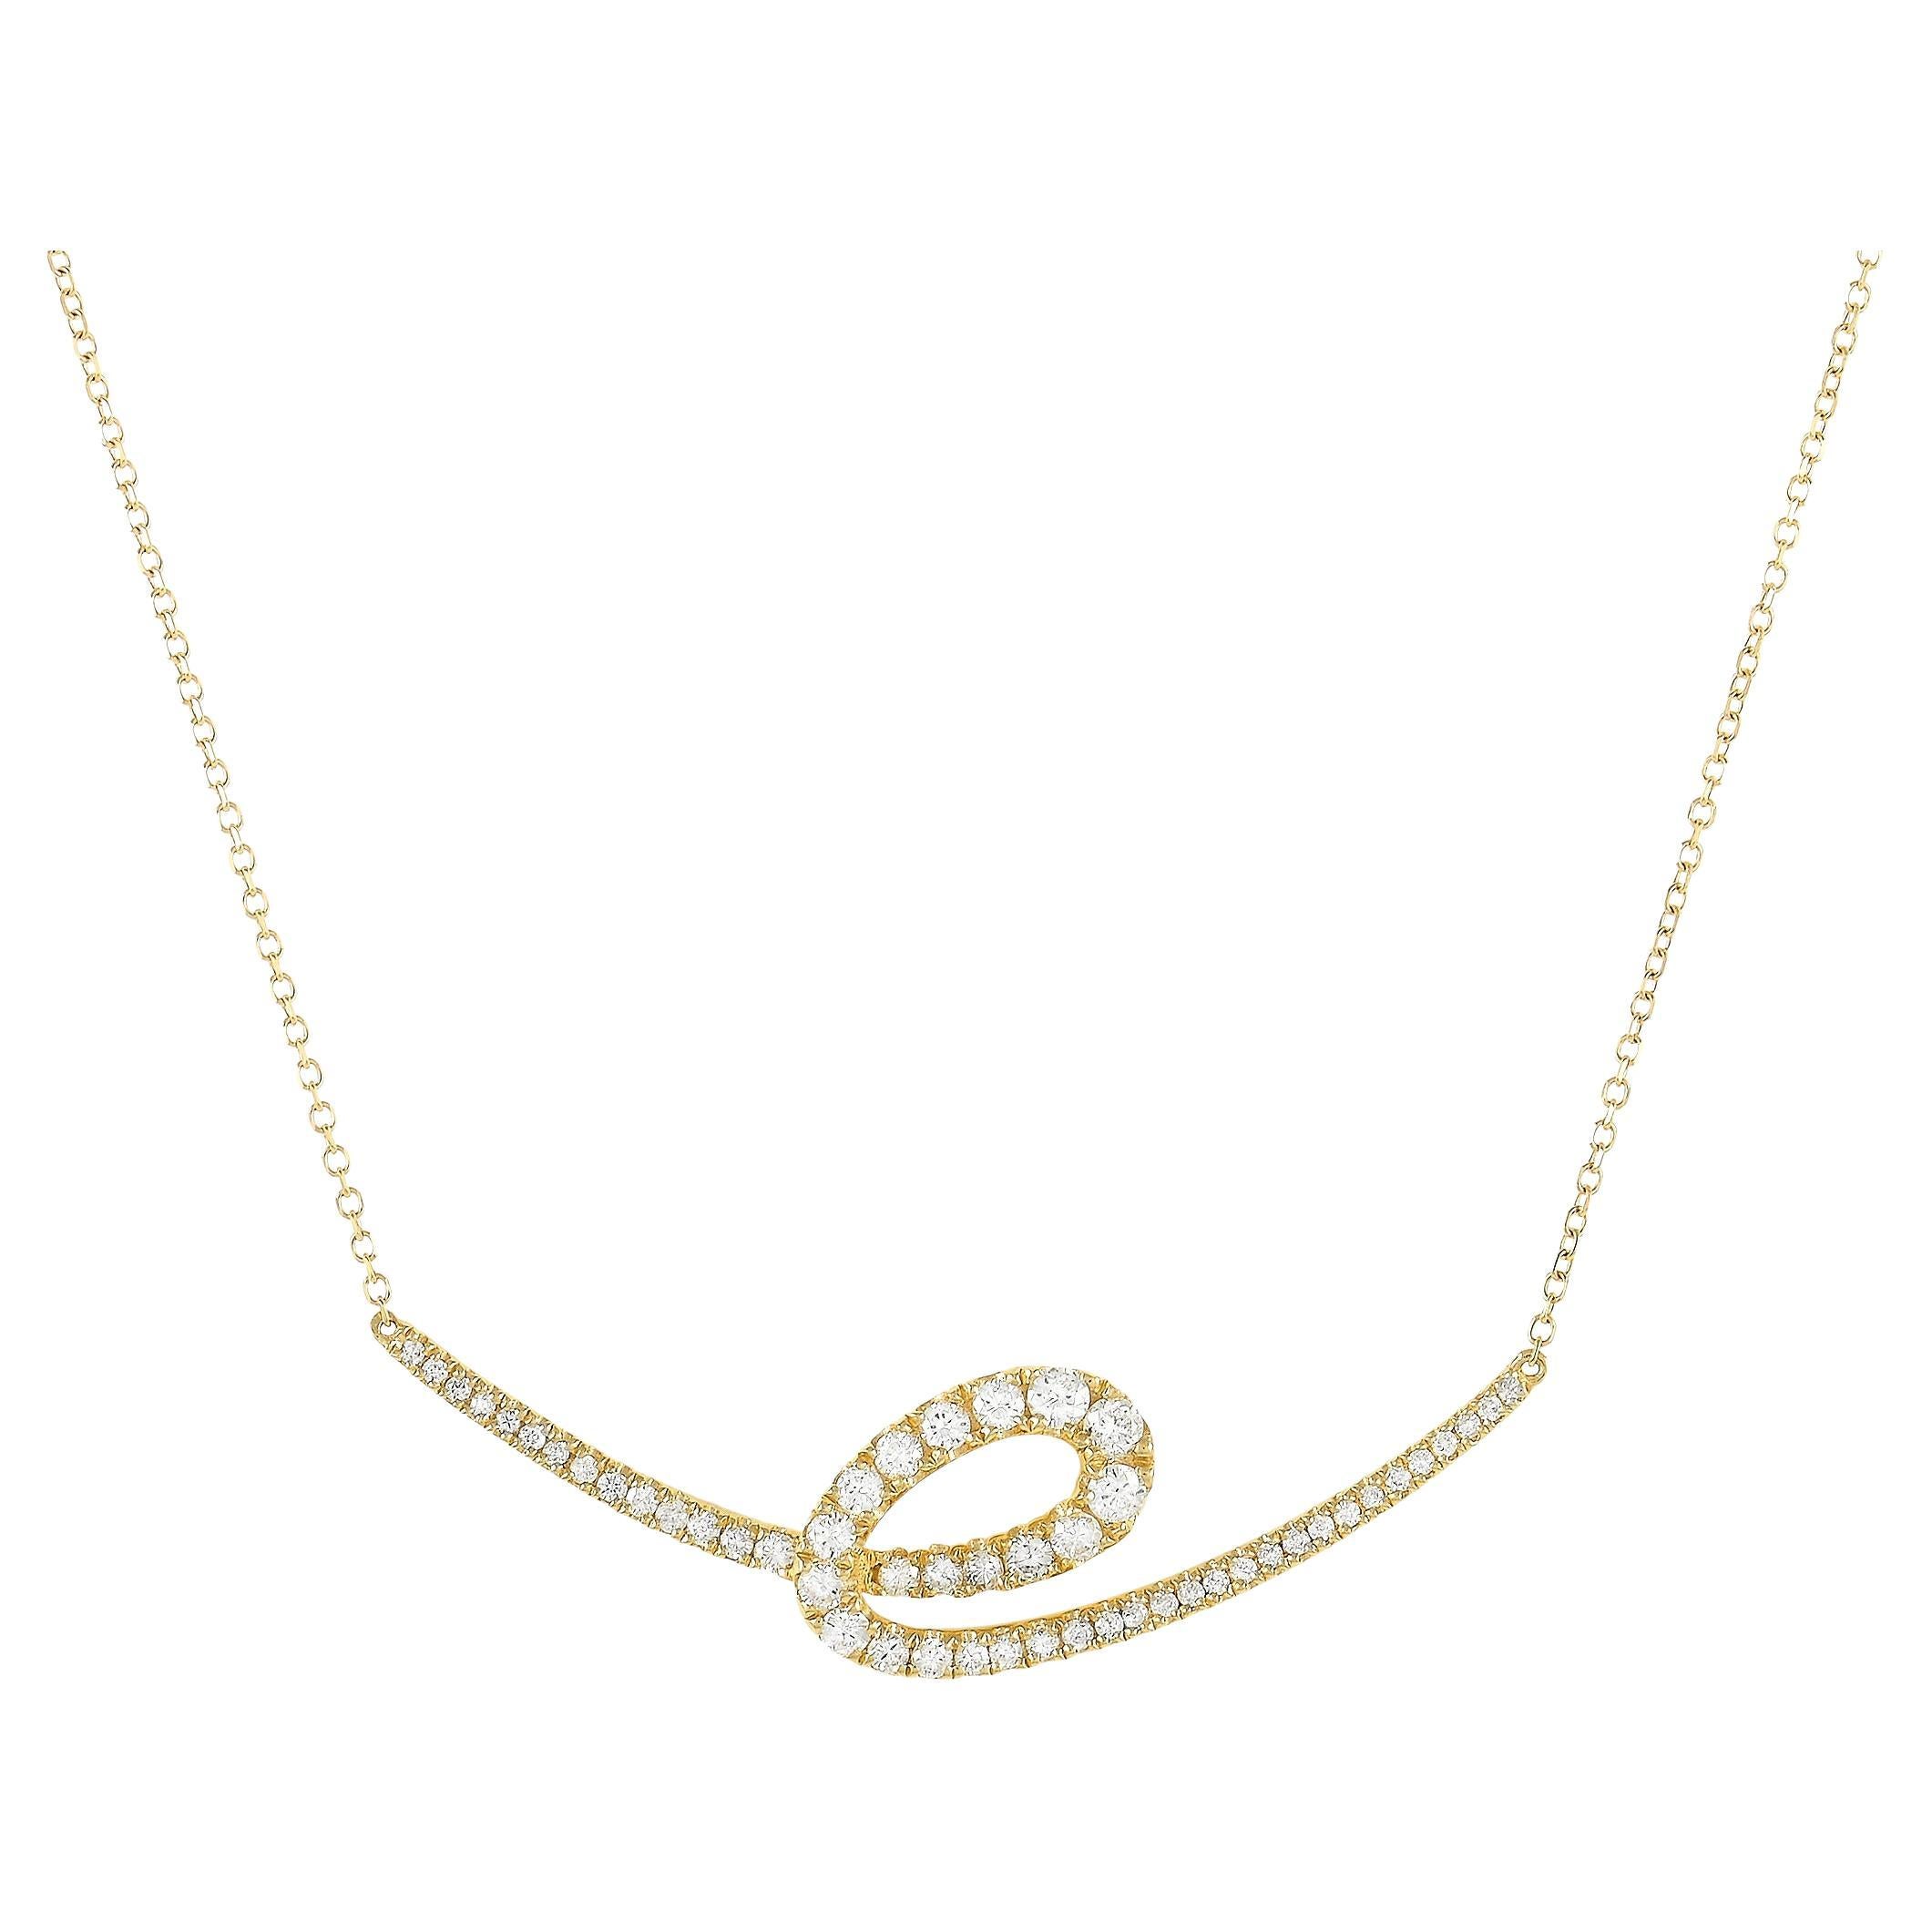 LB Exclusive 14k Yellow Gold 0.48 Carat Diamond Necklace